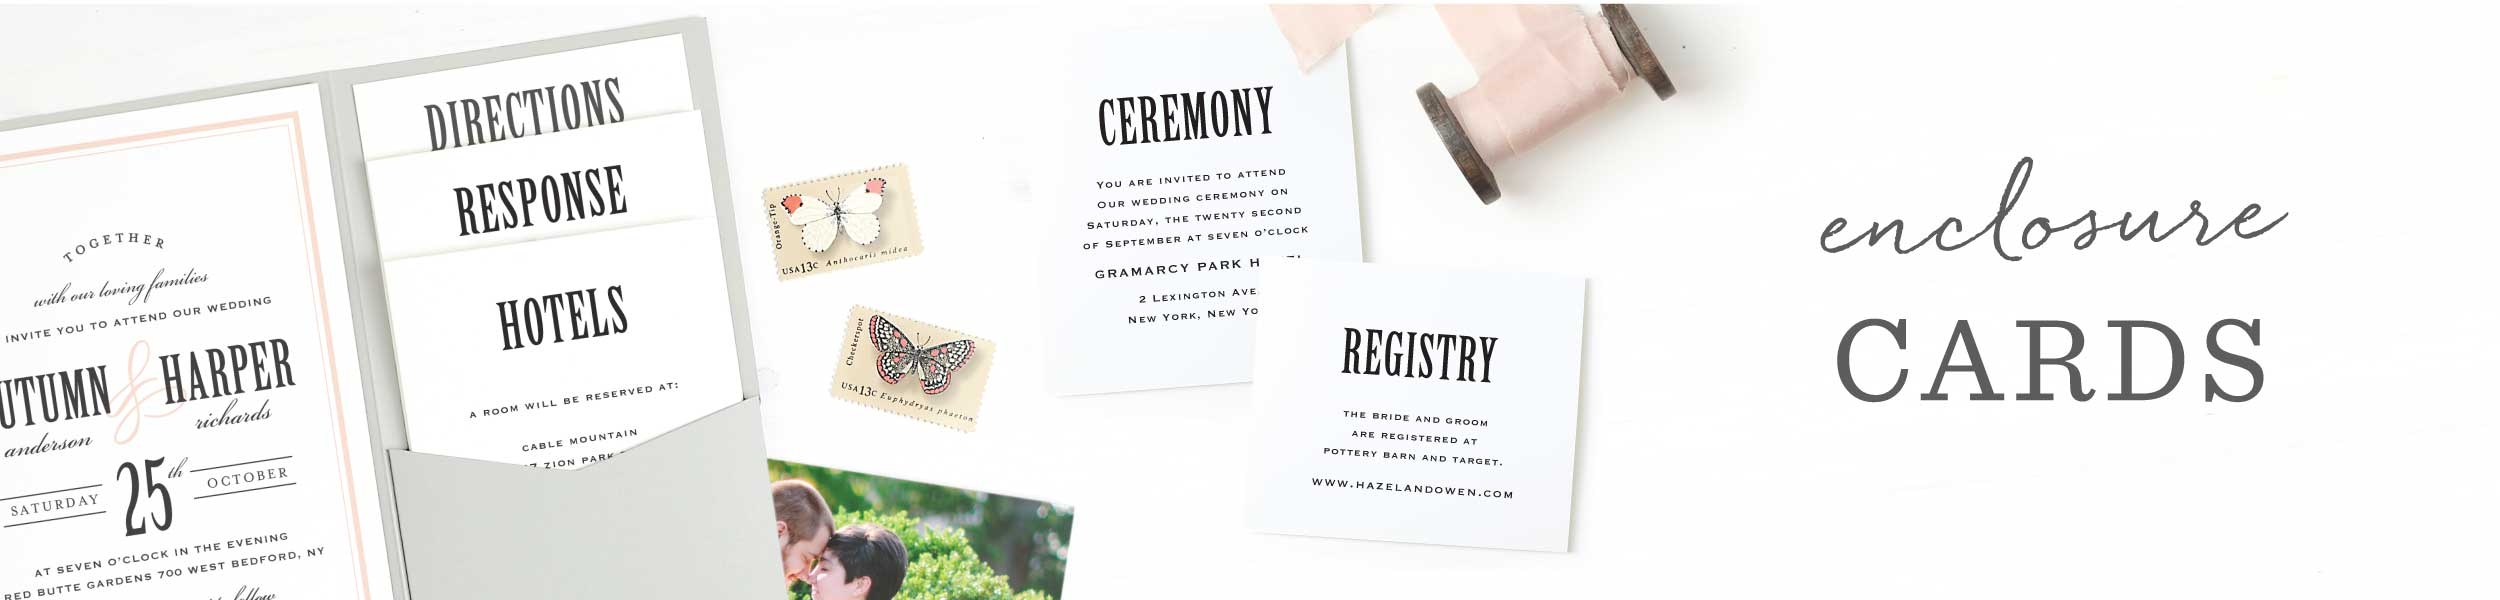 customizable-wedding-accommodation-cards-by-basic-invite